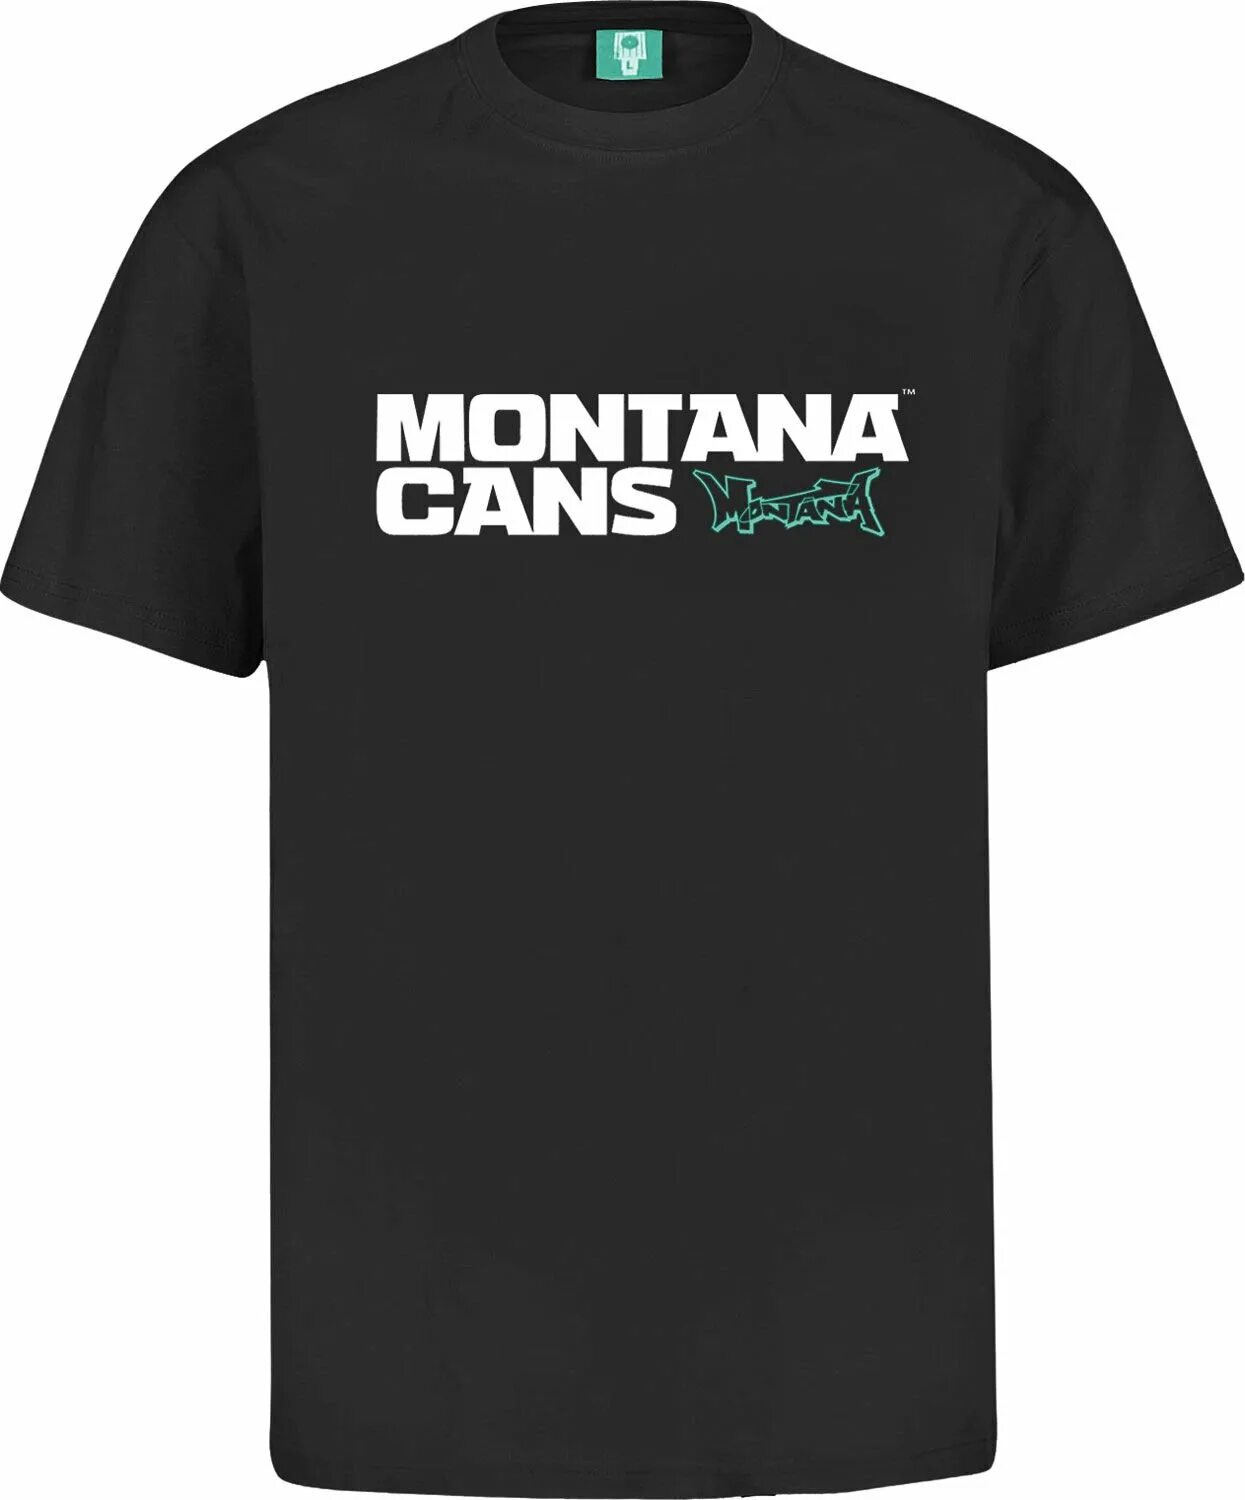 Montana логотип. Монтана cans лого. Монтана Блэк лого. Футболка Montana cans. Montana cans